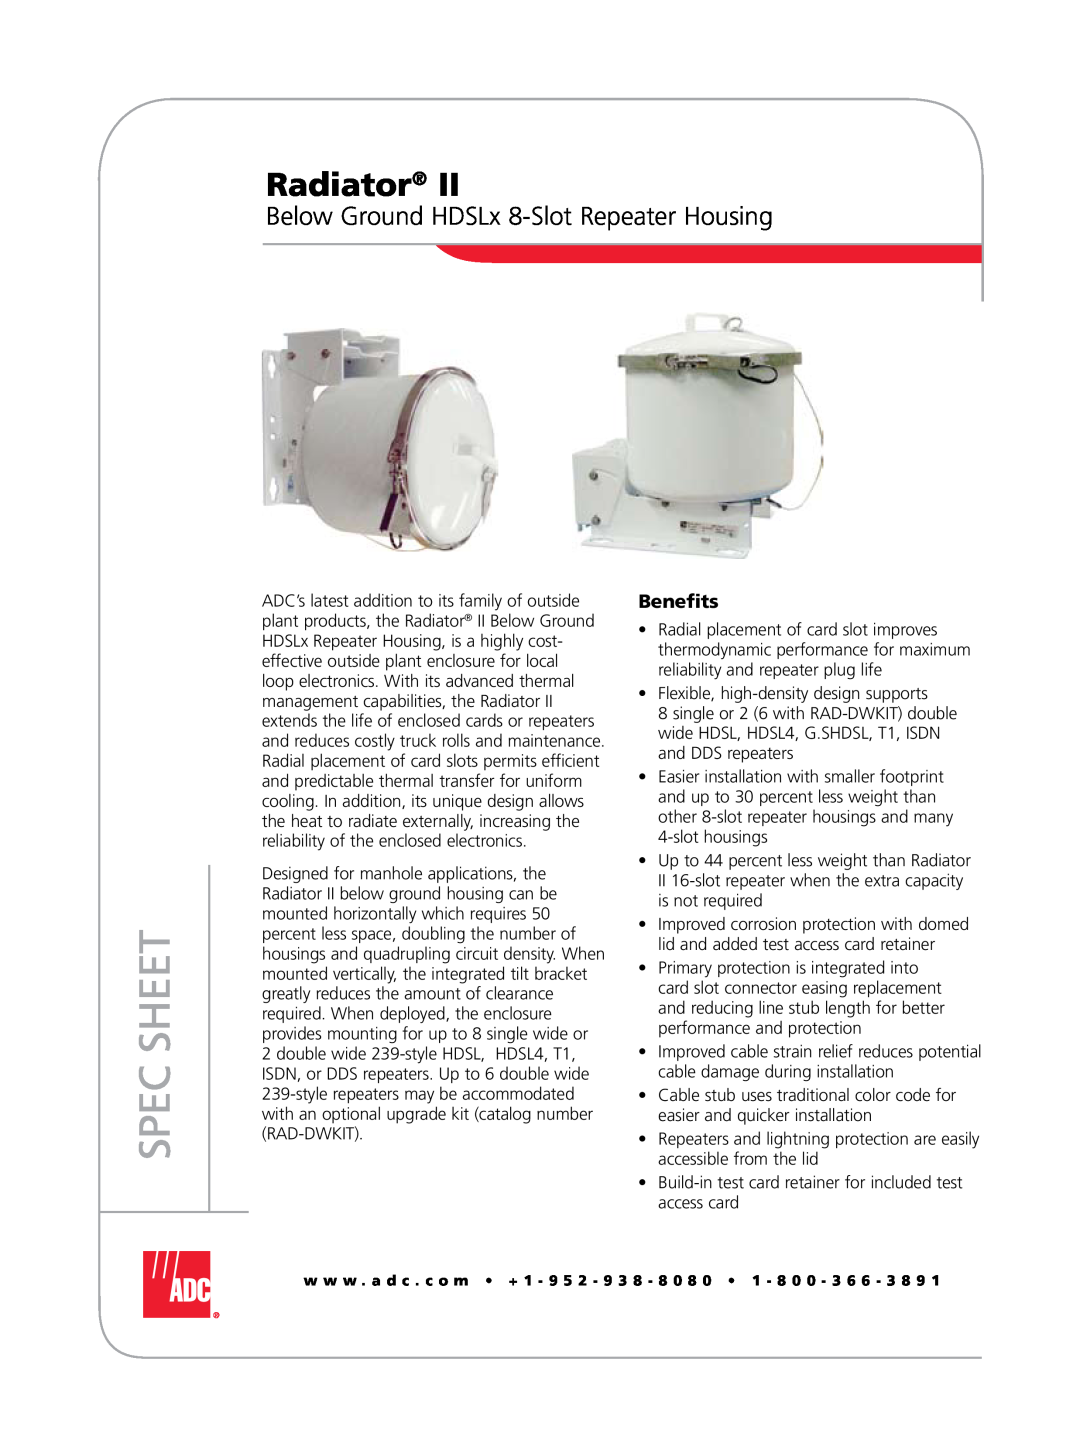 ADC Radiator II manual Below Ground HDSLx 8-Slot Repeater Housing, Spec Sheet, Benefits 